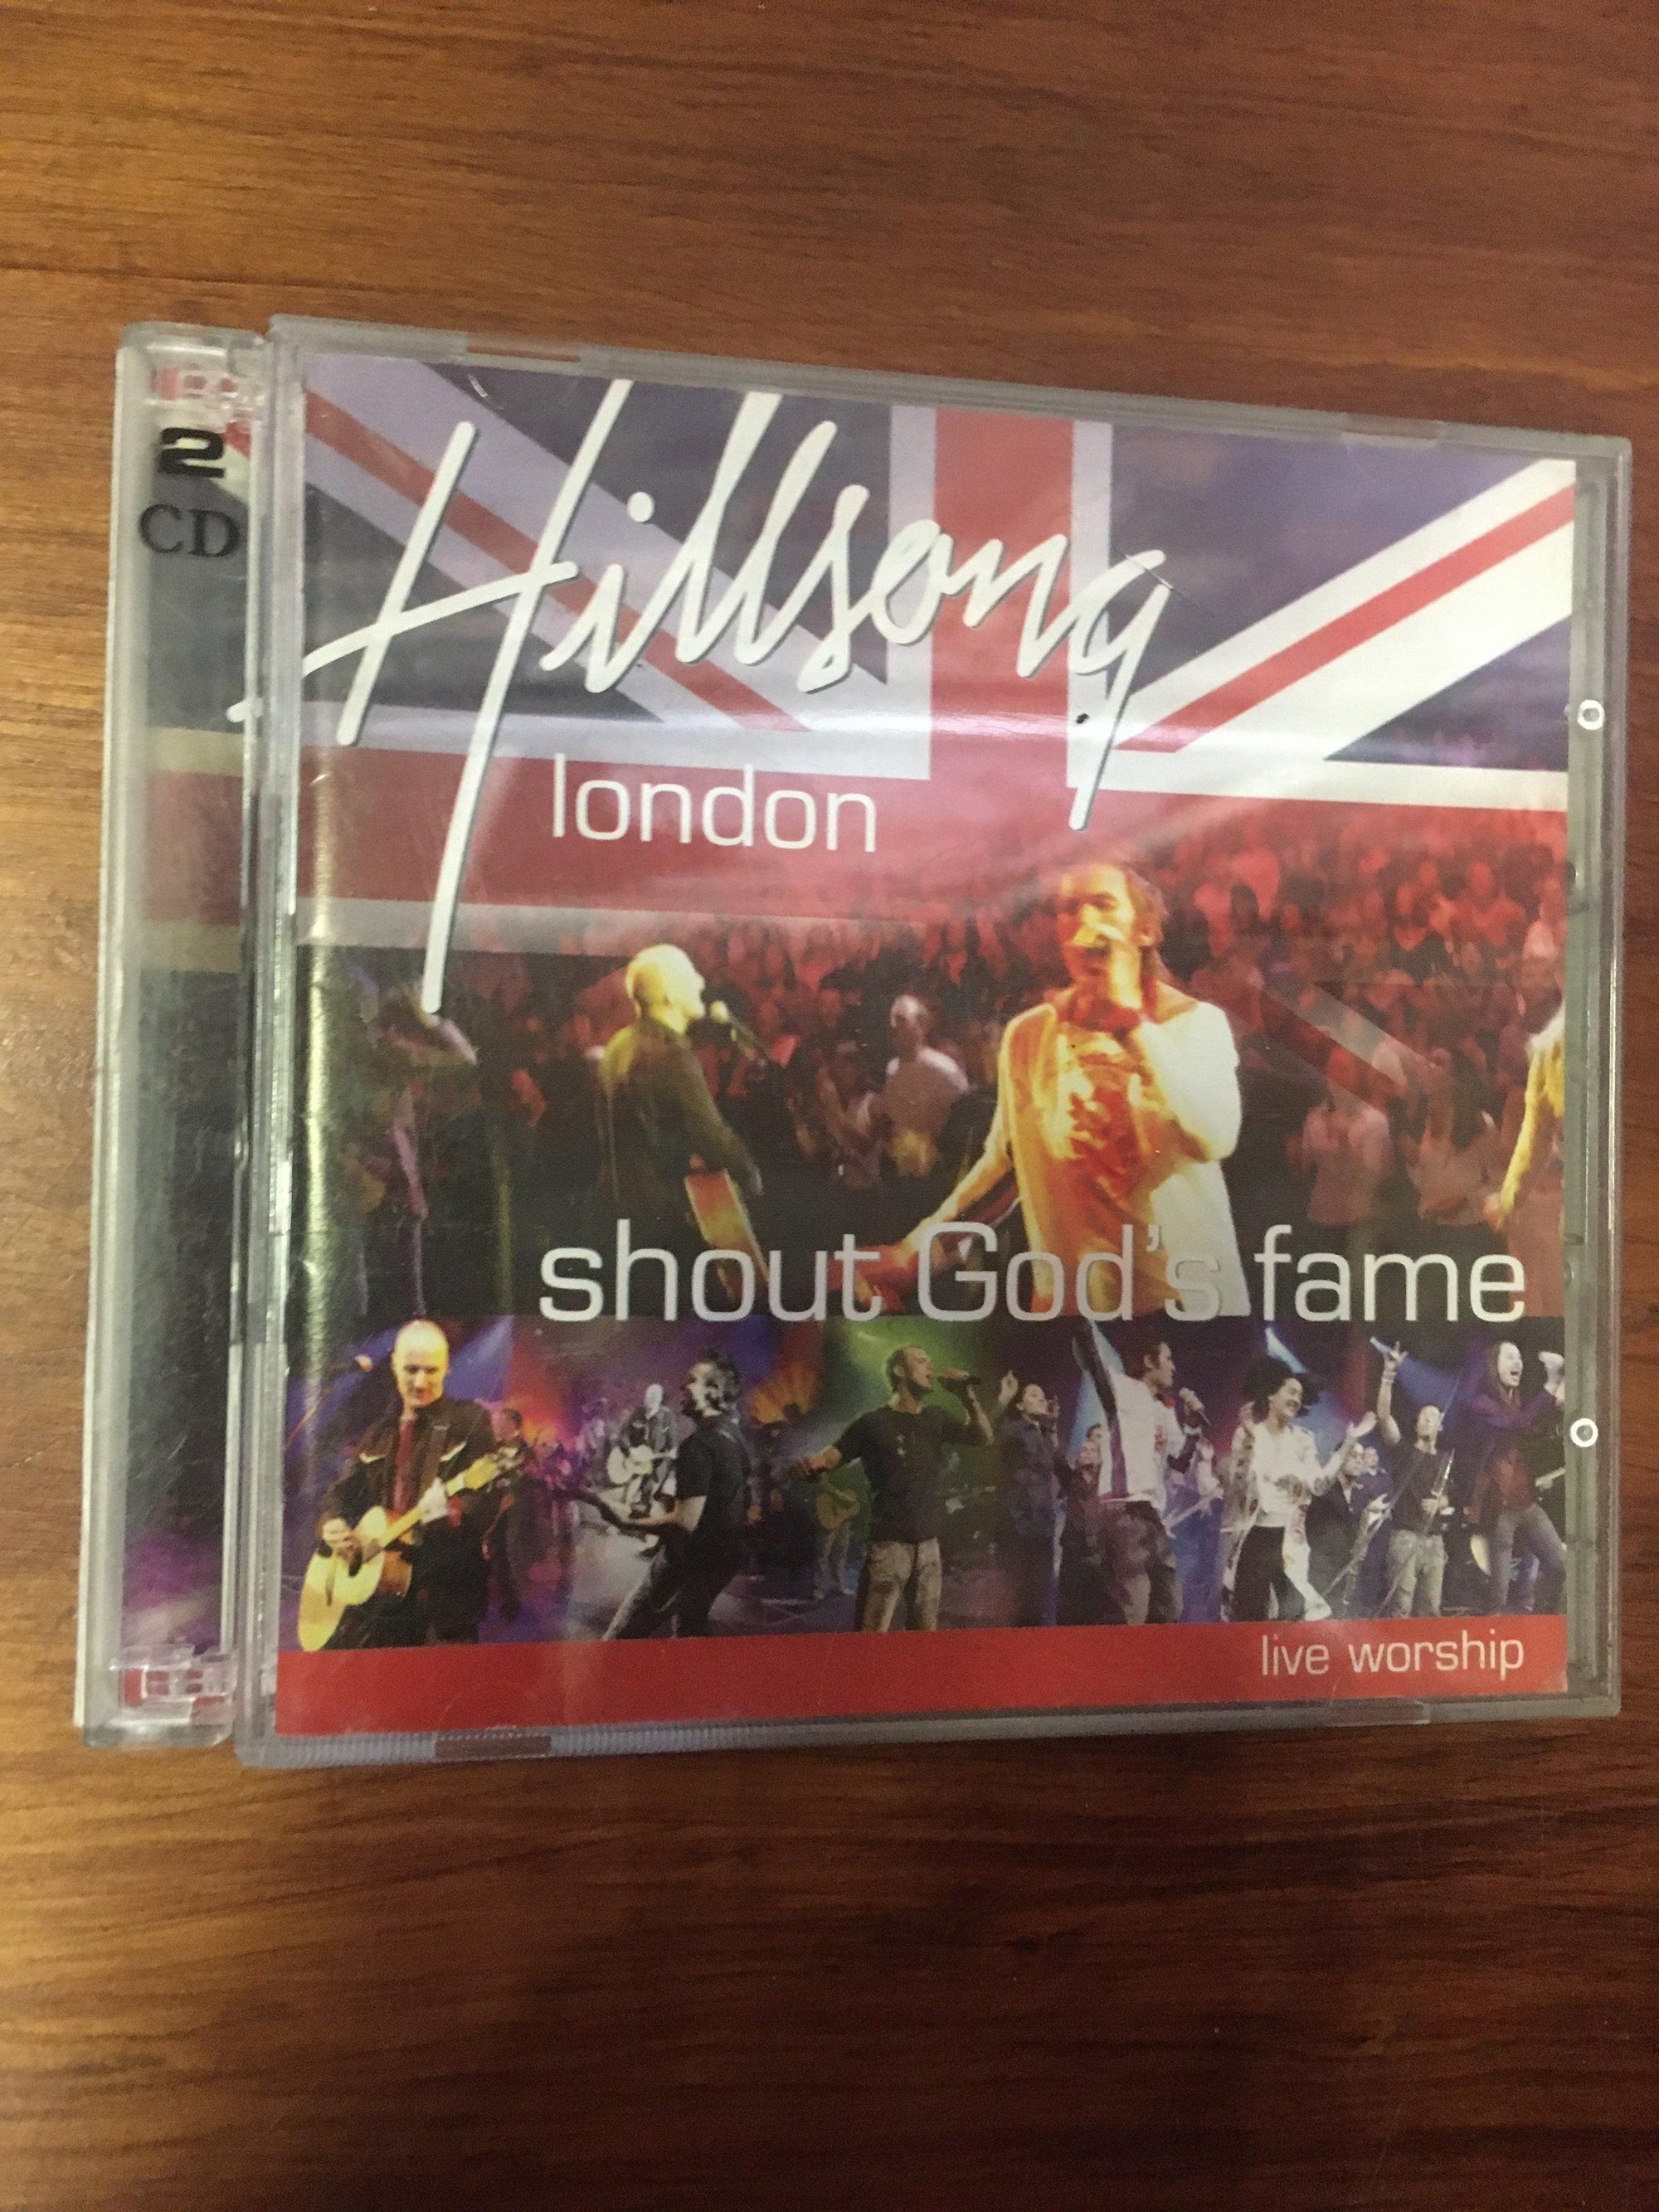 Hillsong: London - CD - 2ndhandwarehouse.com